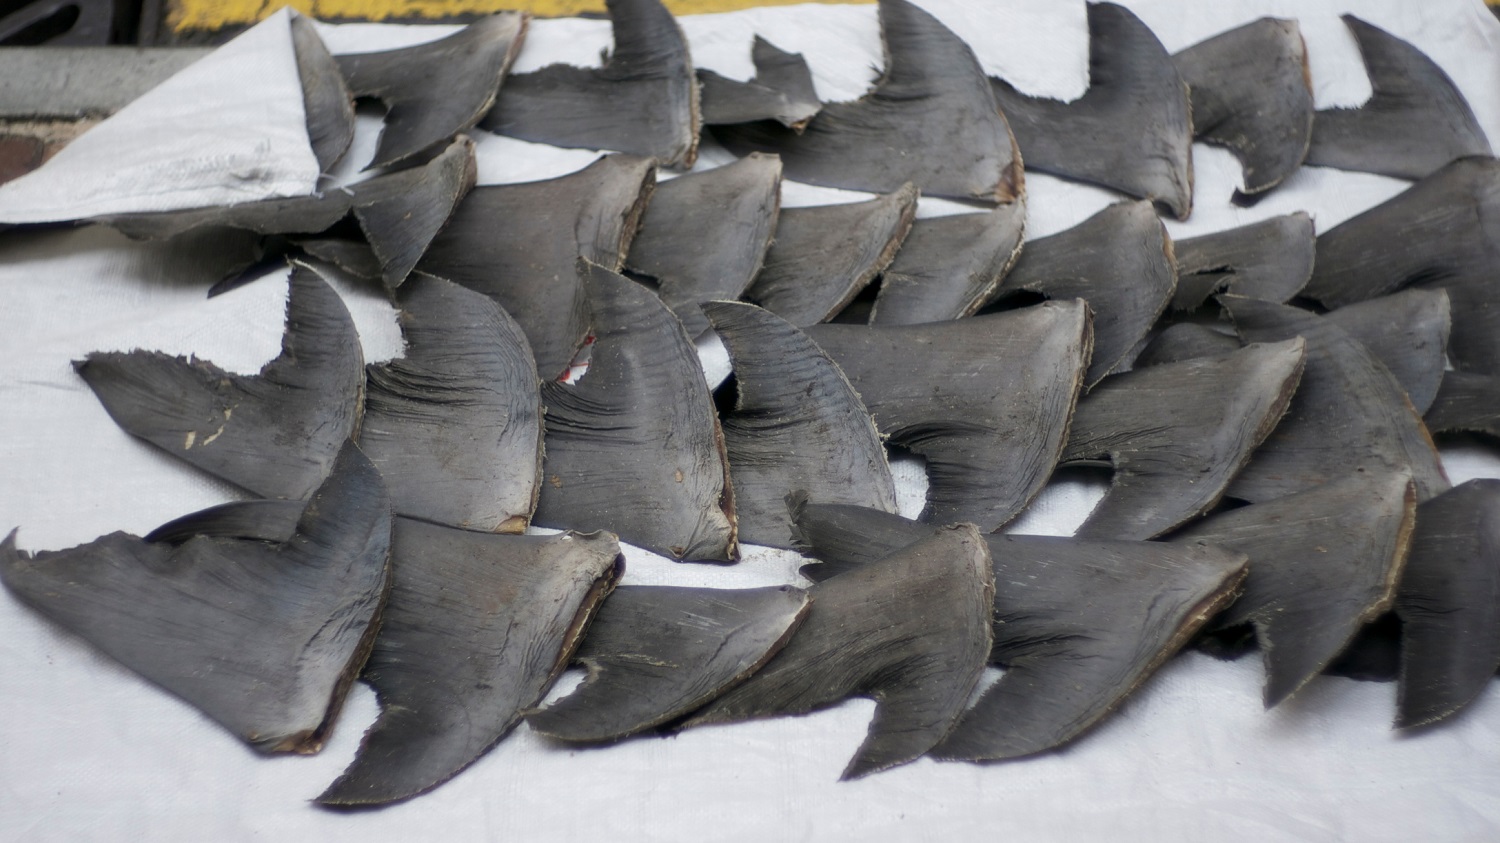 In shark fin export capital Peru, Asian demand threatens local species